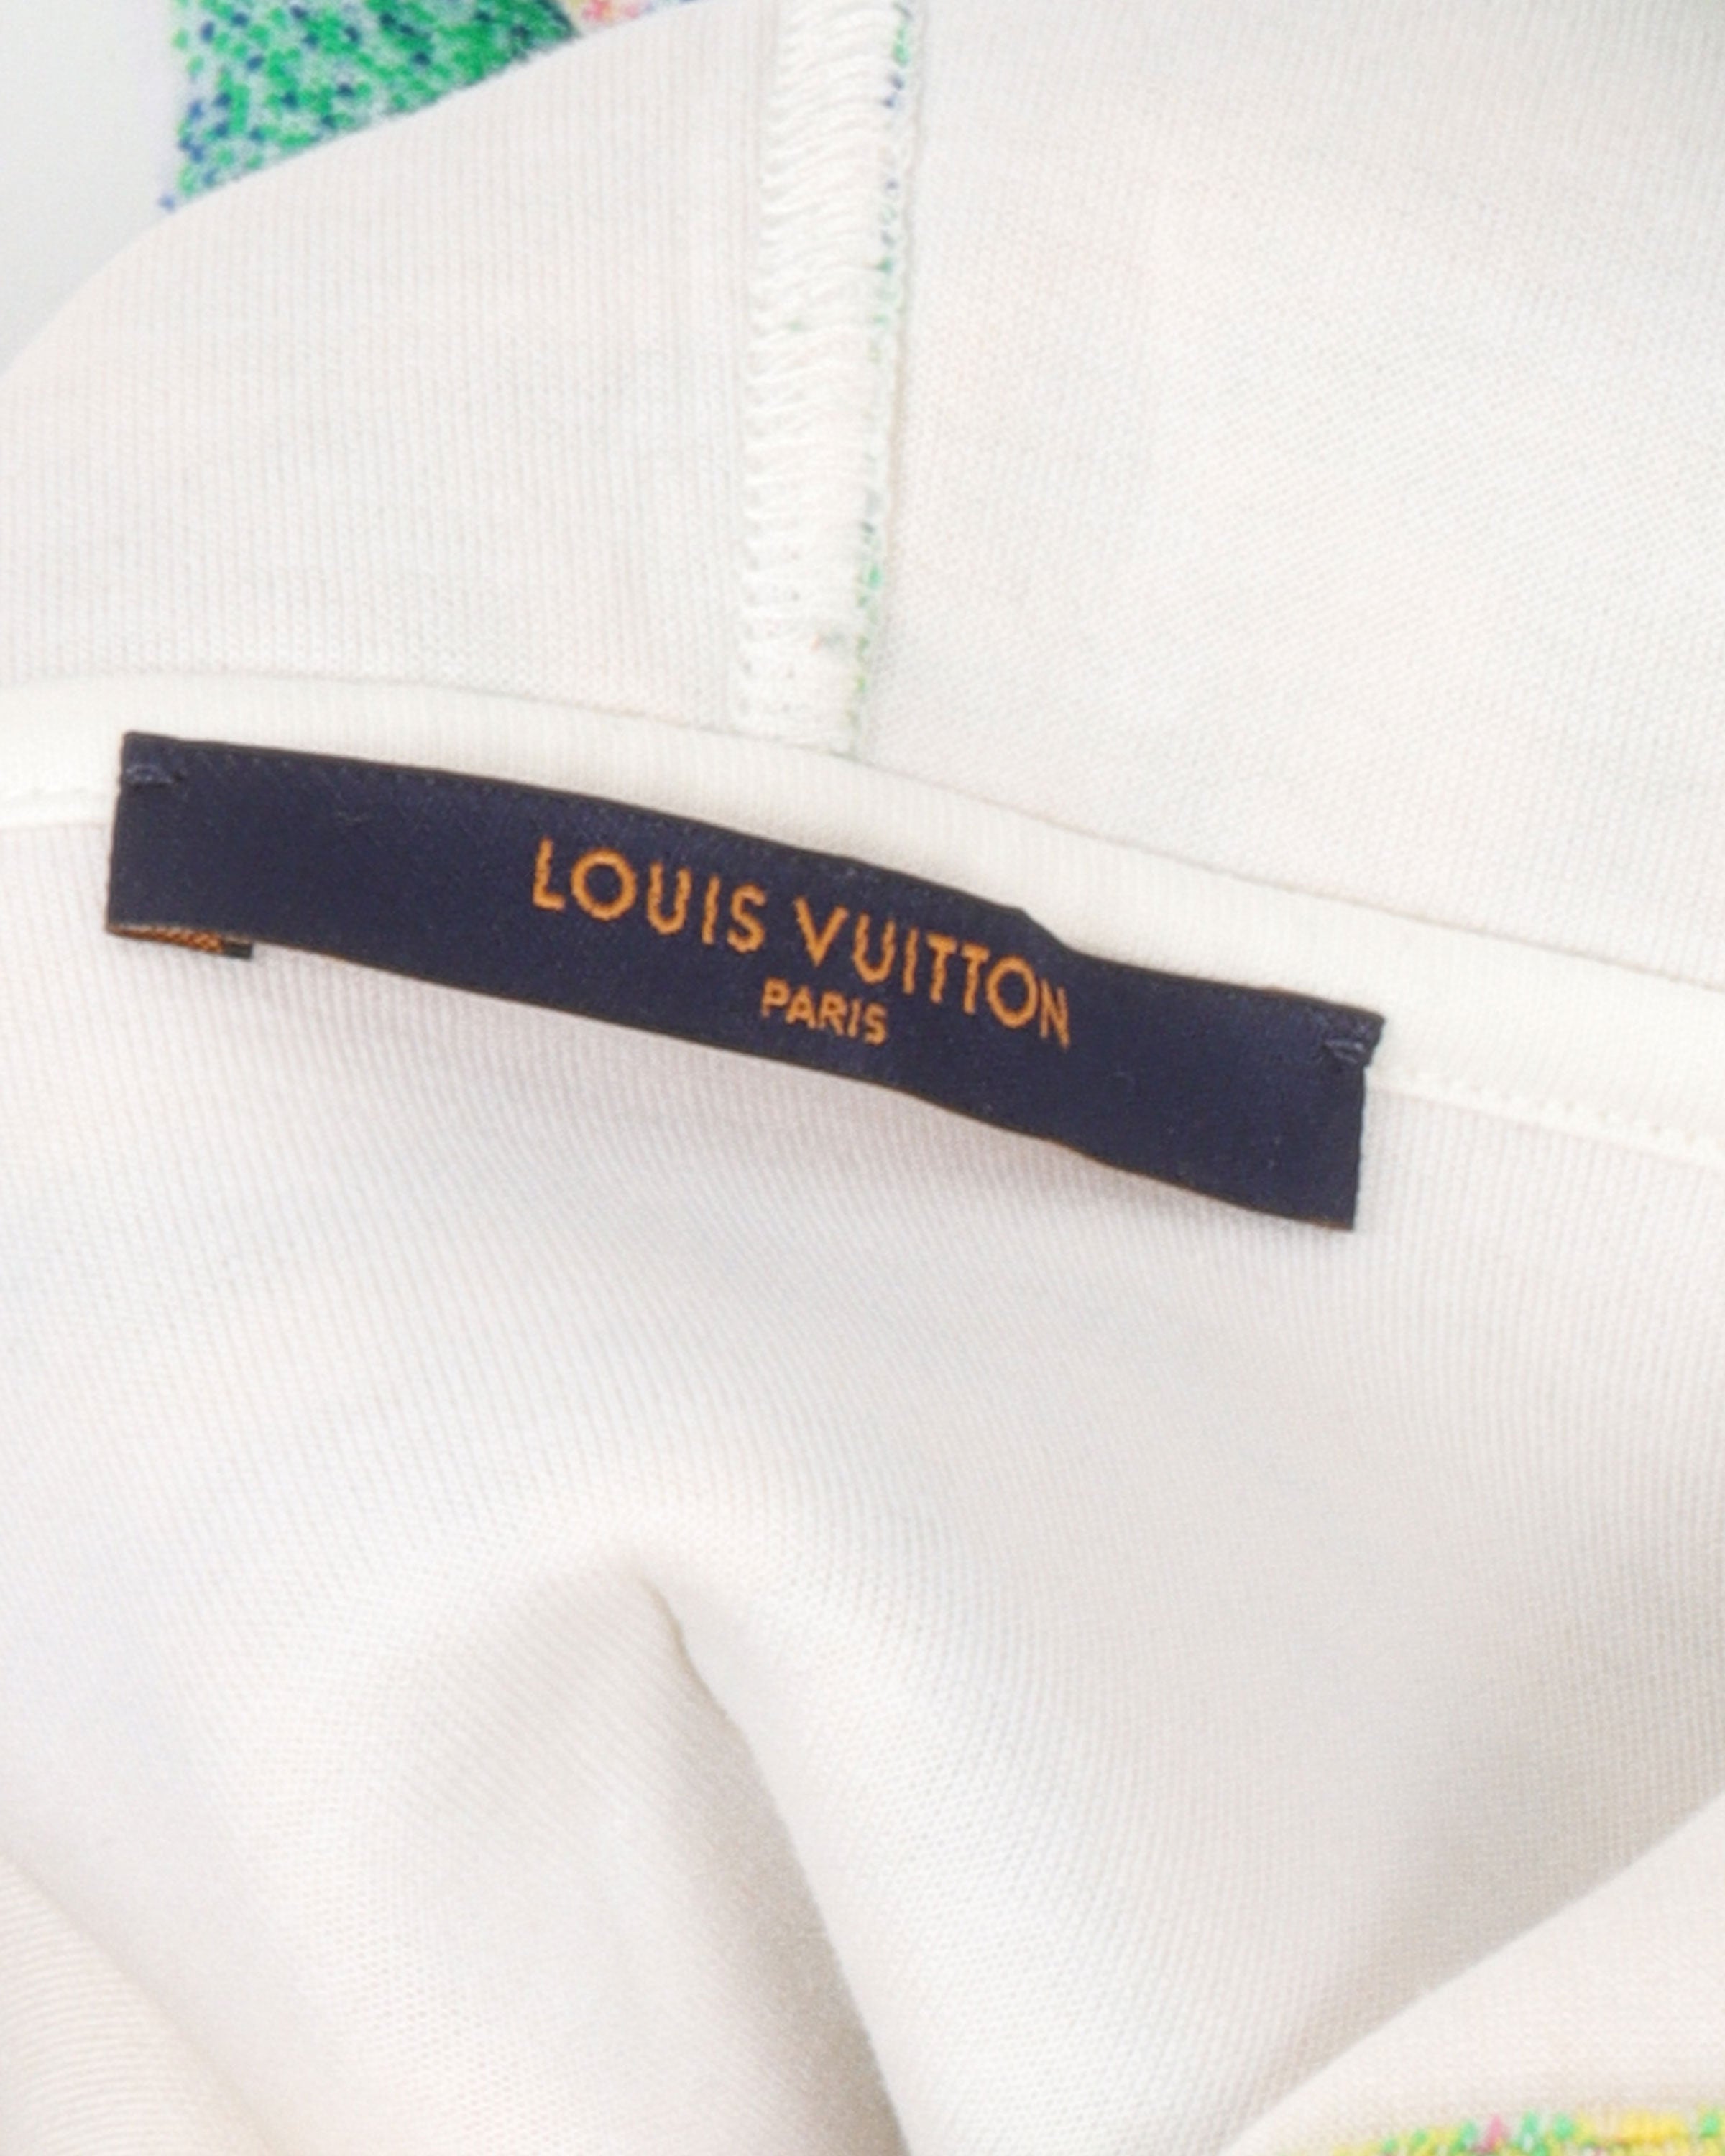 A mood 😎 @louisvuitton trench coat & tote ✨ #LouisVuitton #LV  #micahgianneli